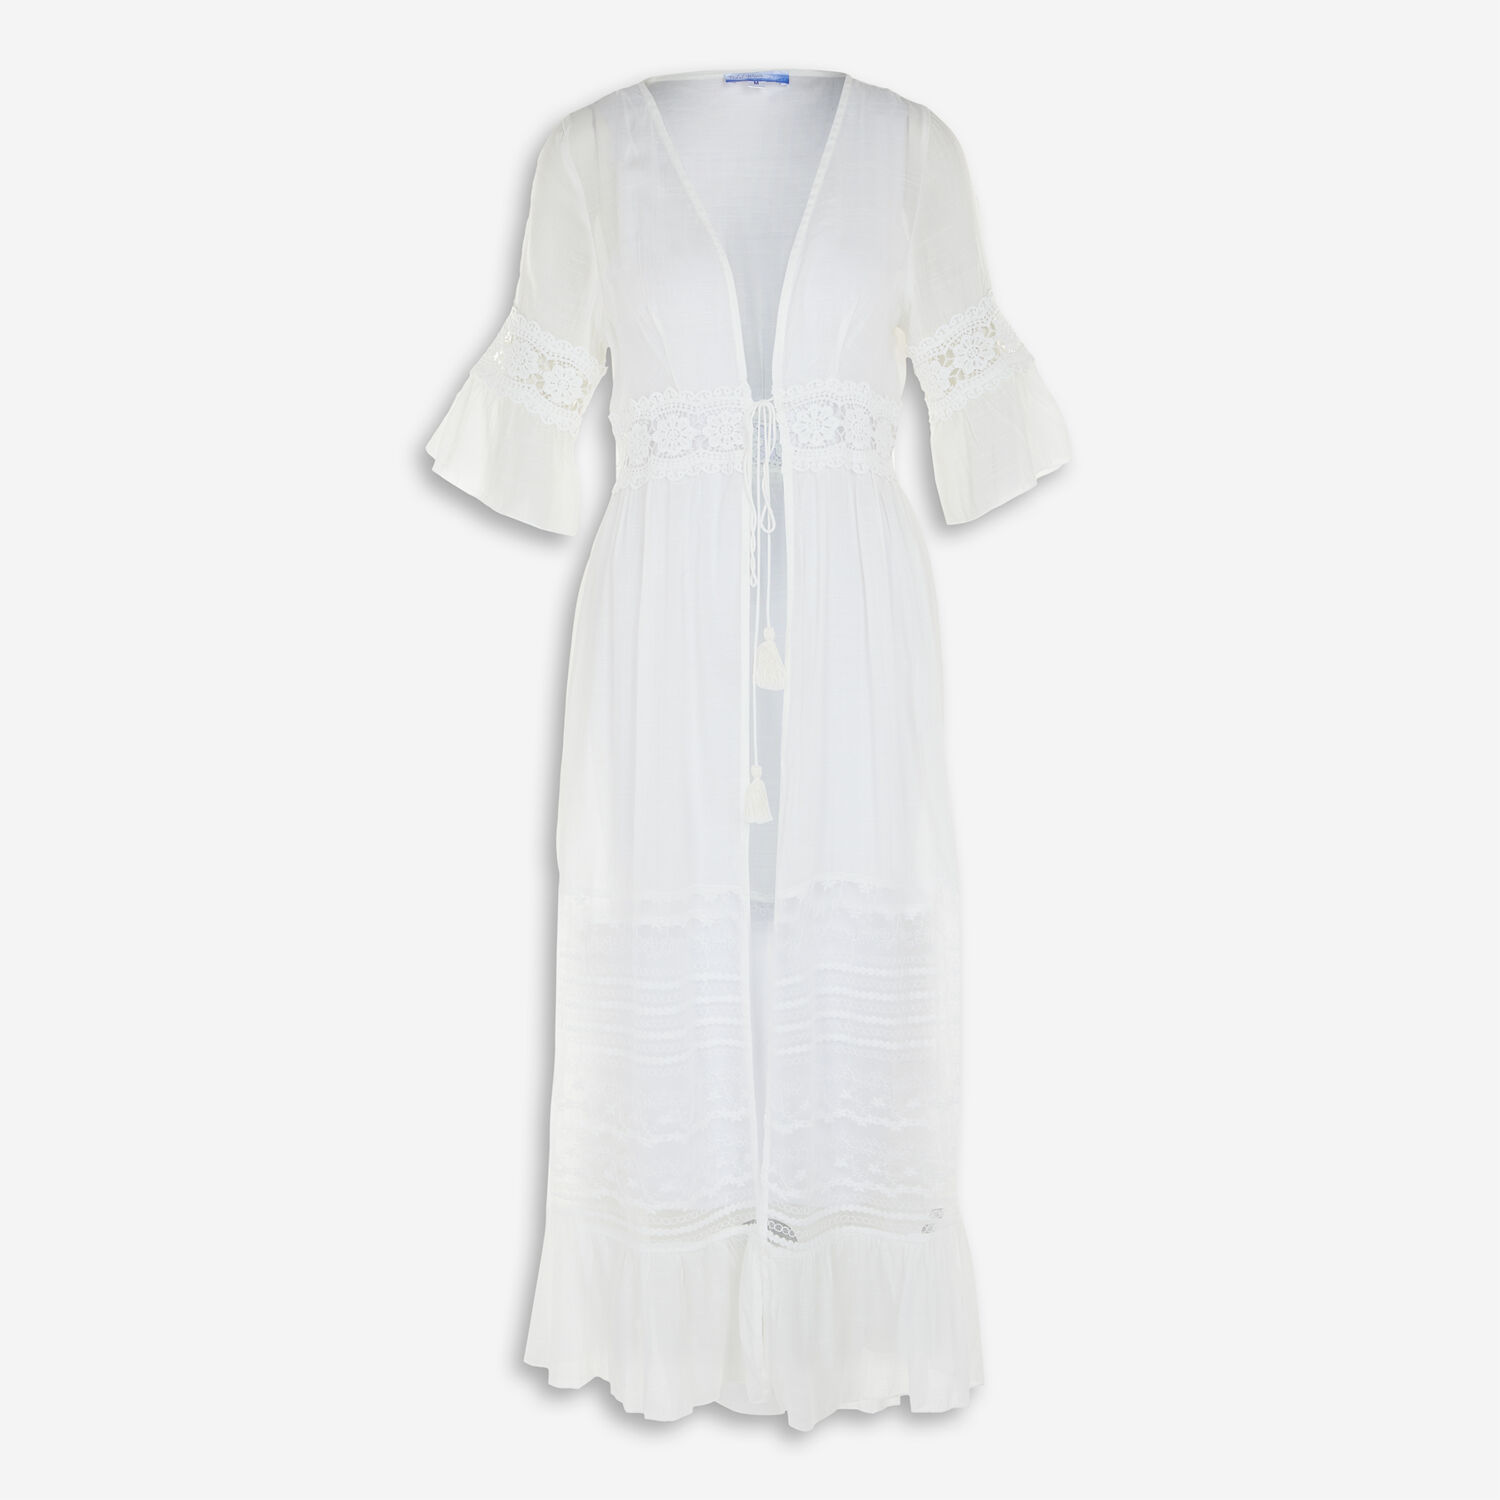 цена Белая длинная пляжная одежда с кружевным дизайном Tidal Wave Beachwear